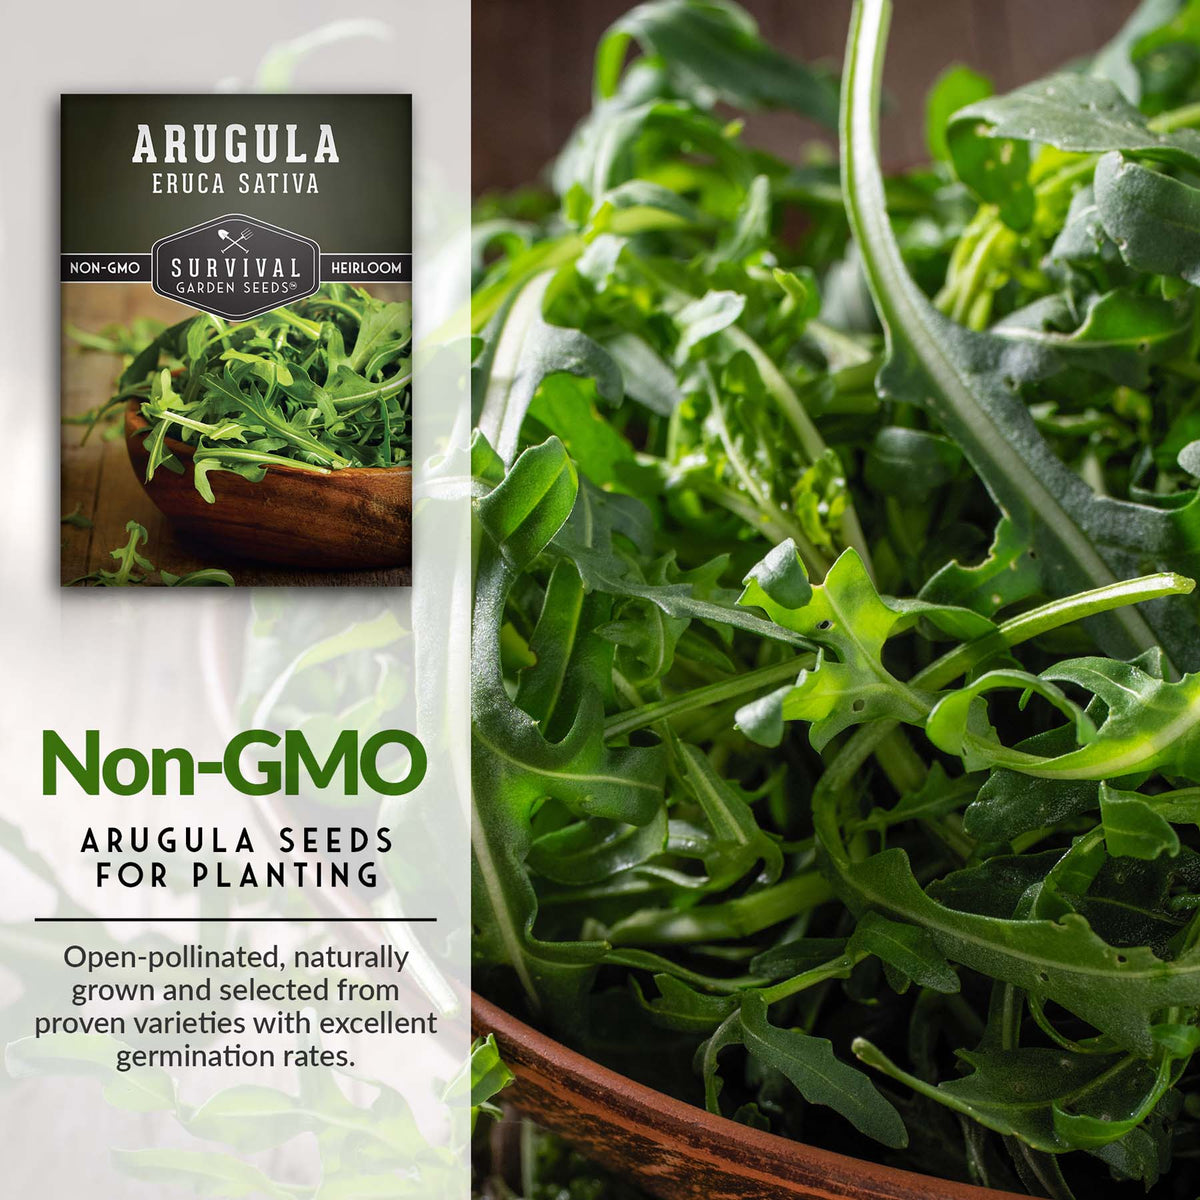 Non-GMO arugula seeds for planting